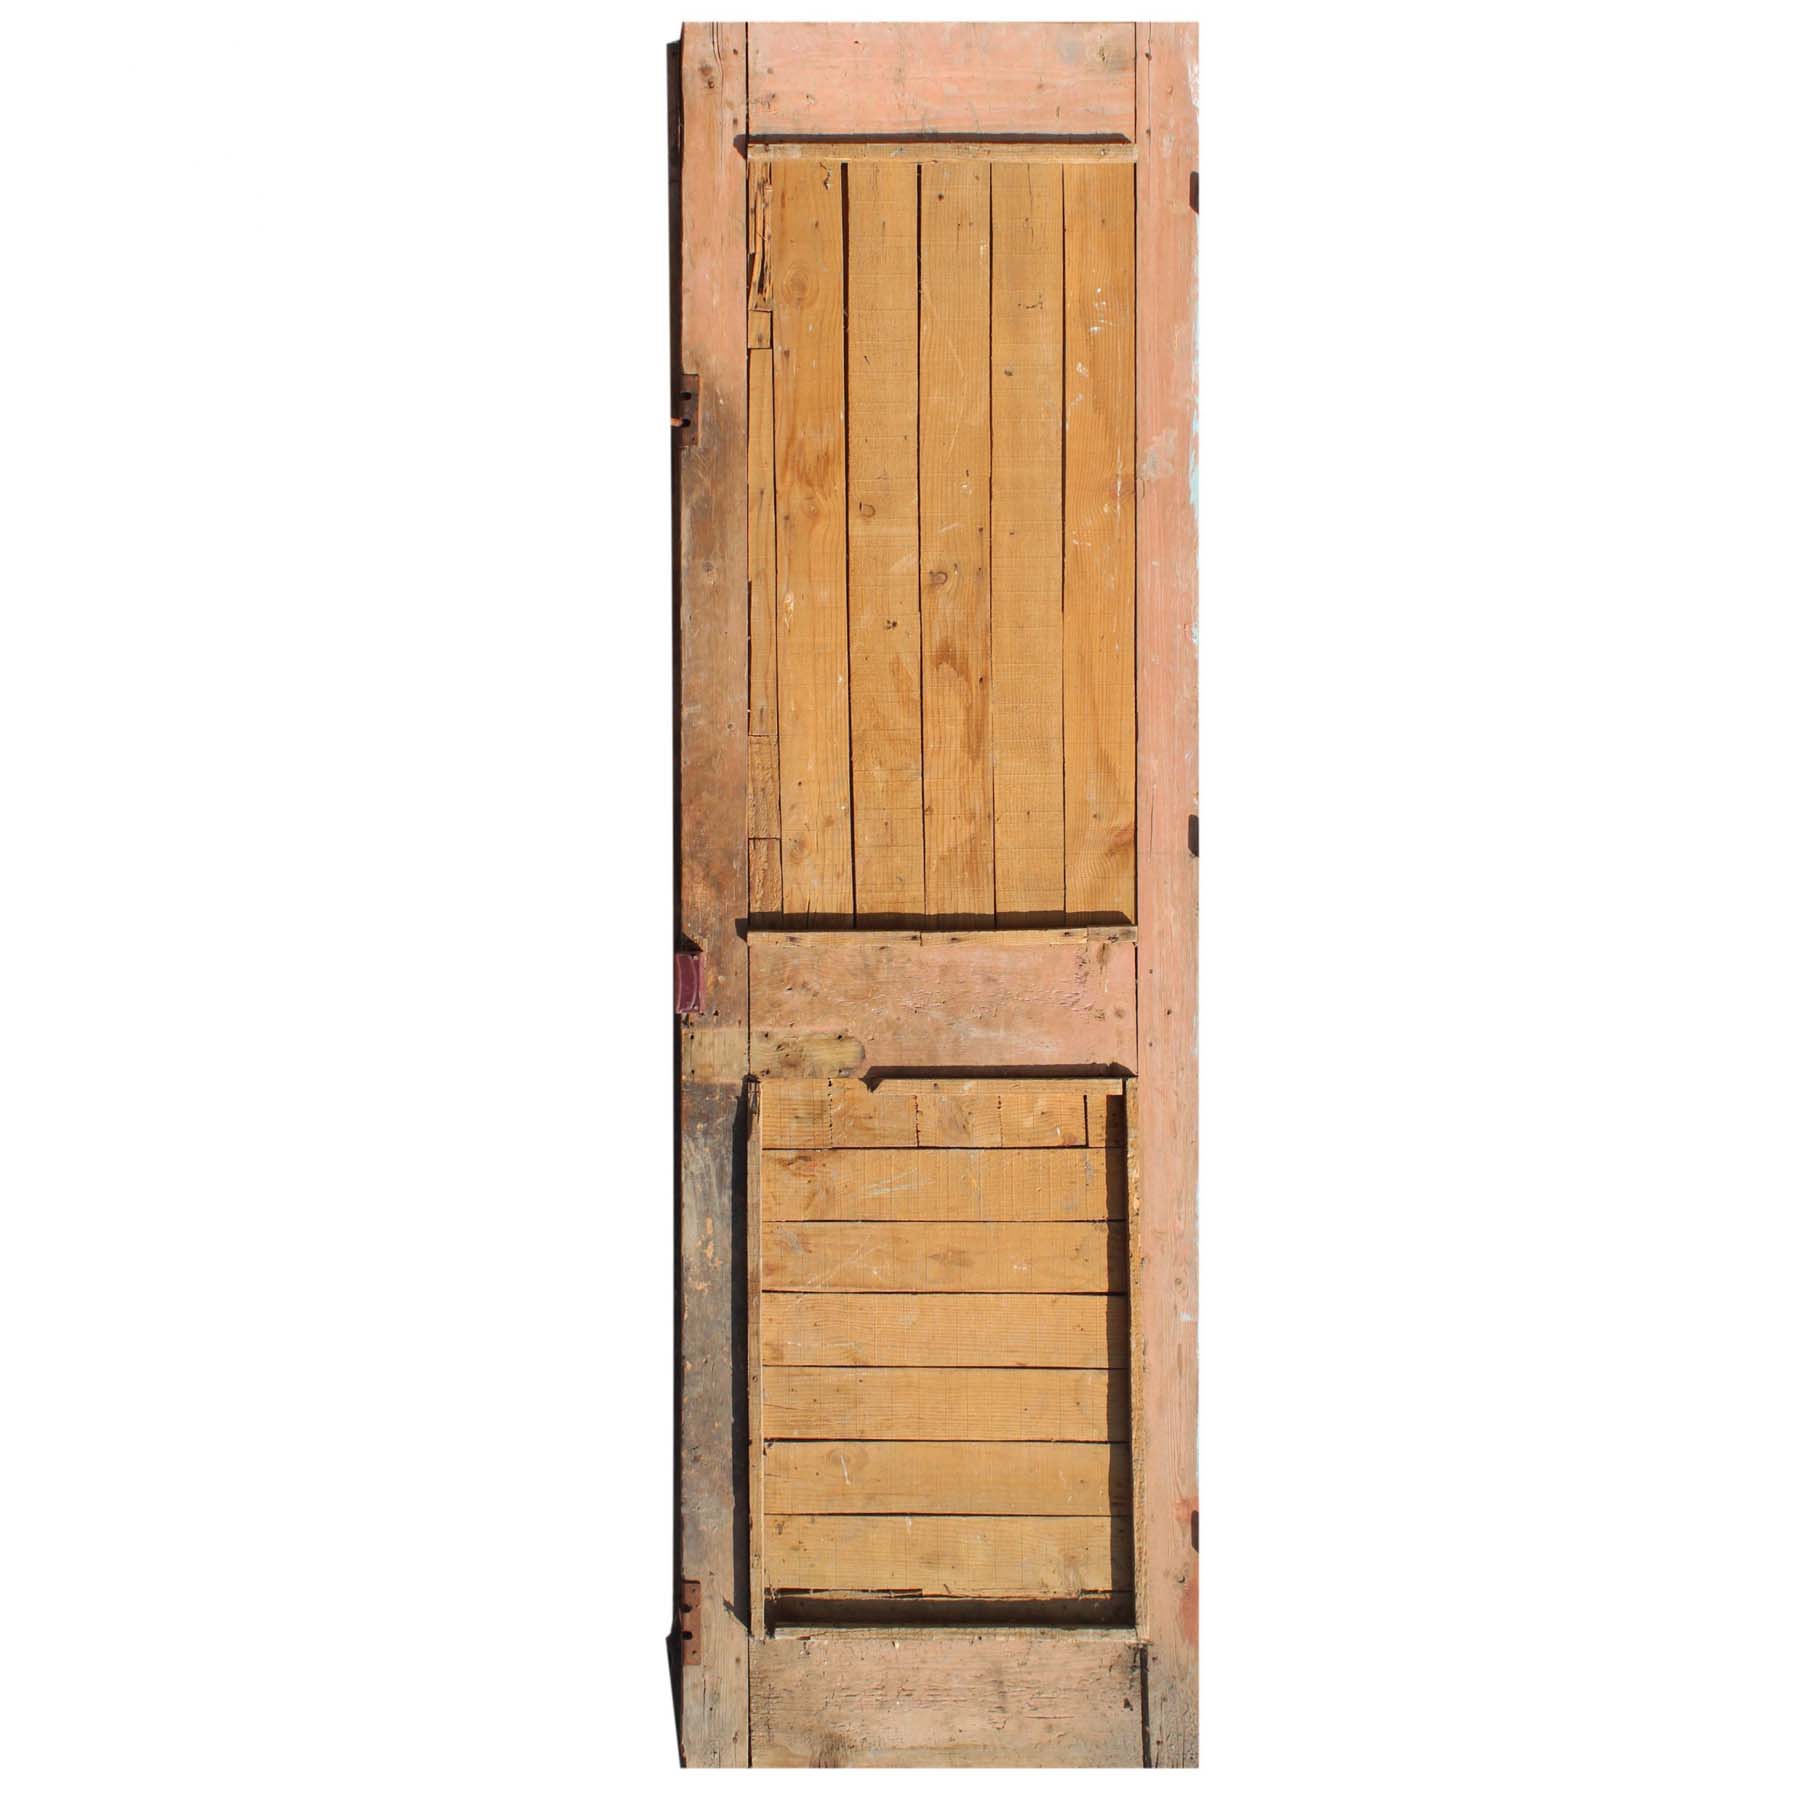 Salvaged 29” Door with Carved Details-69214